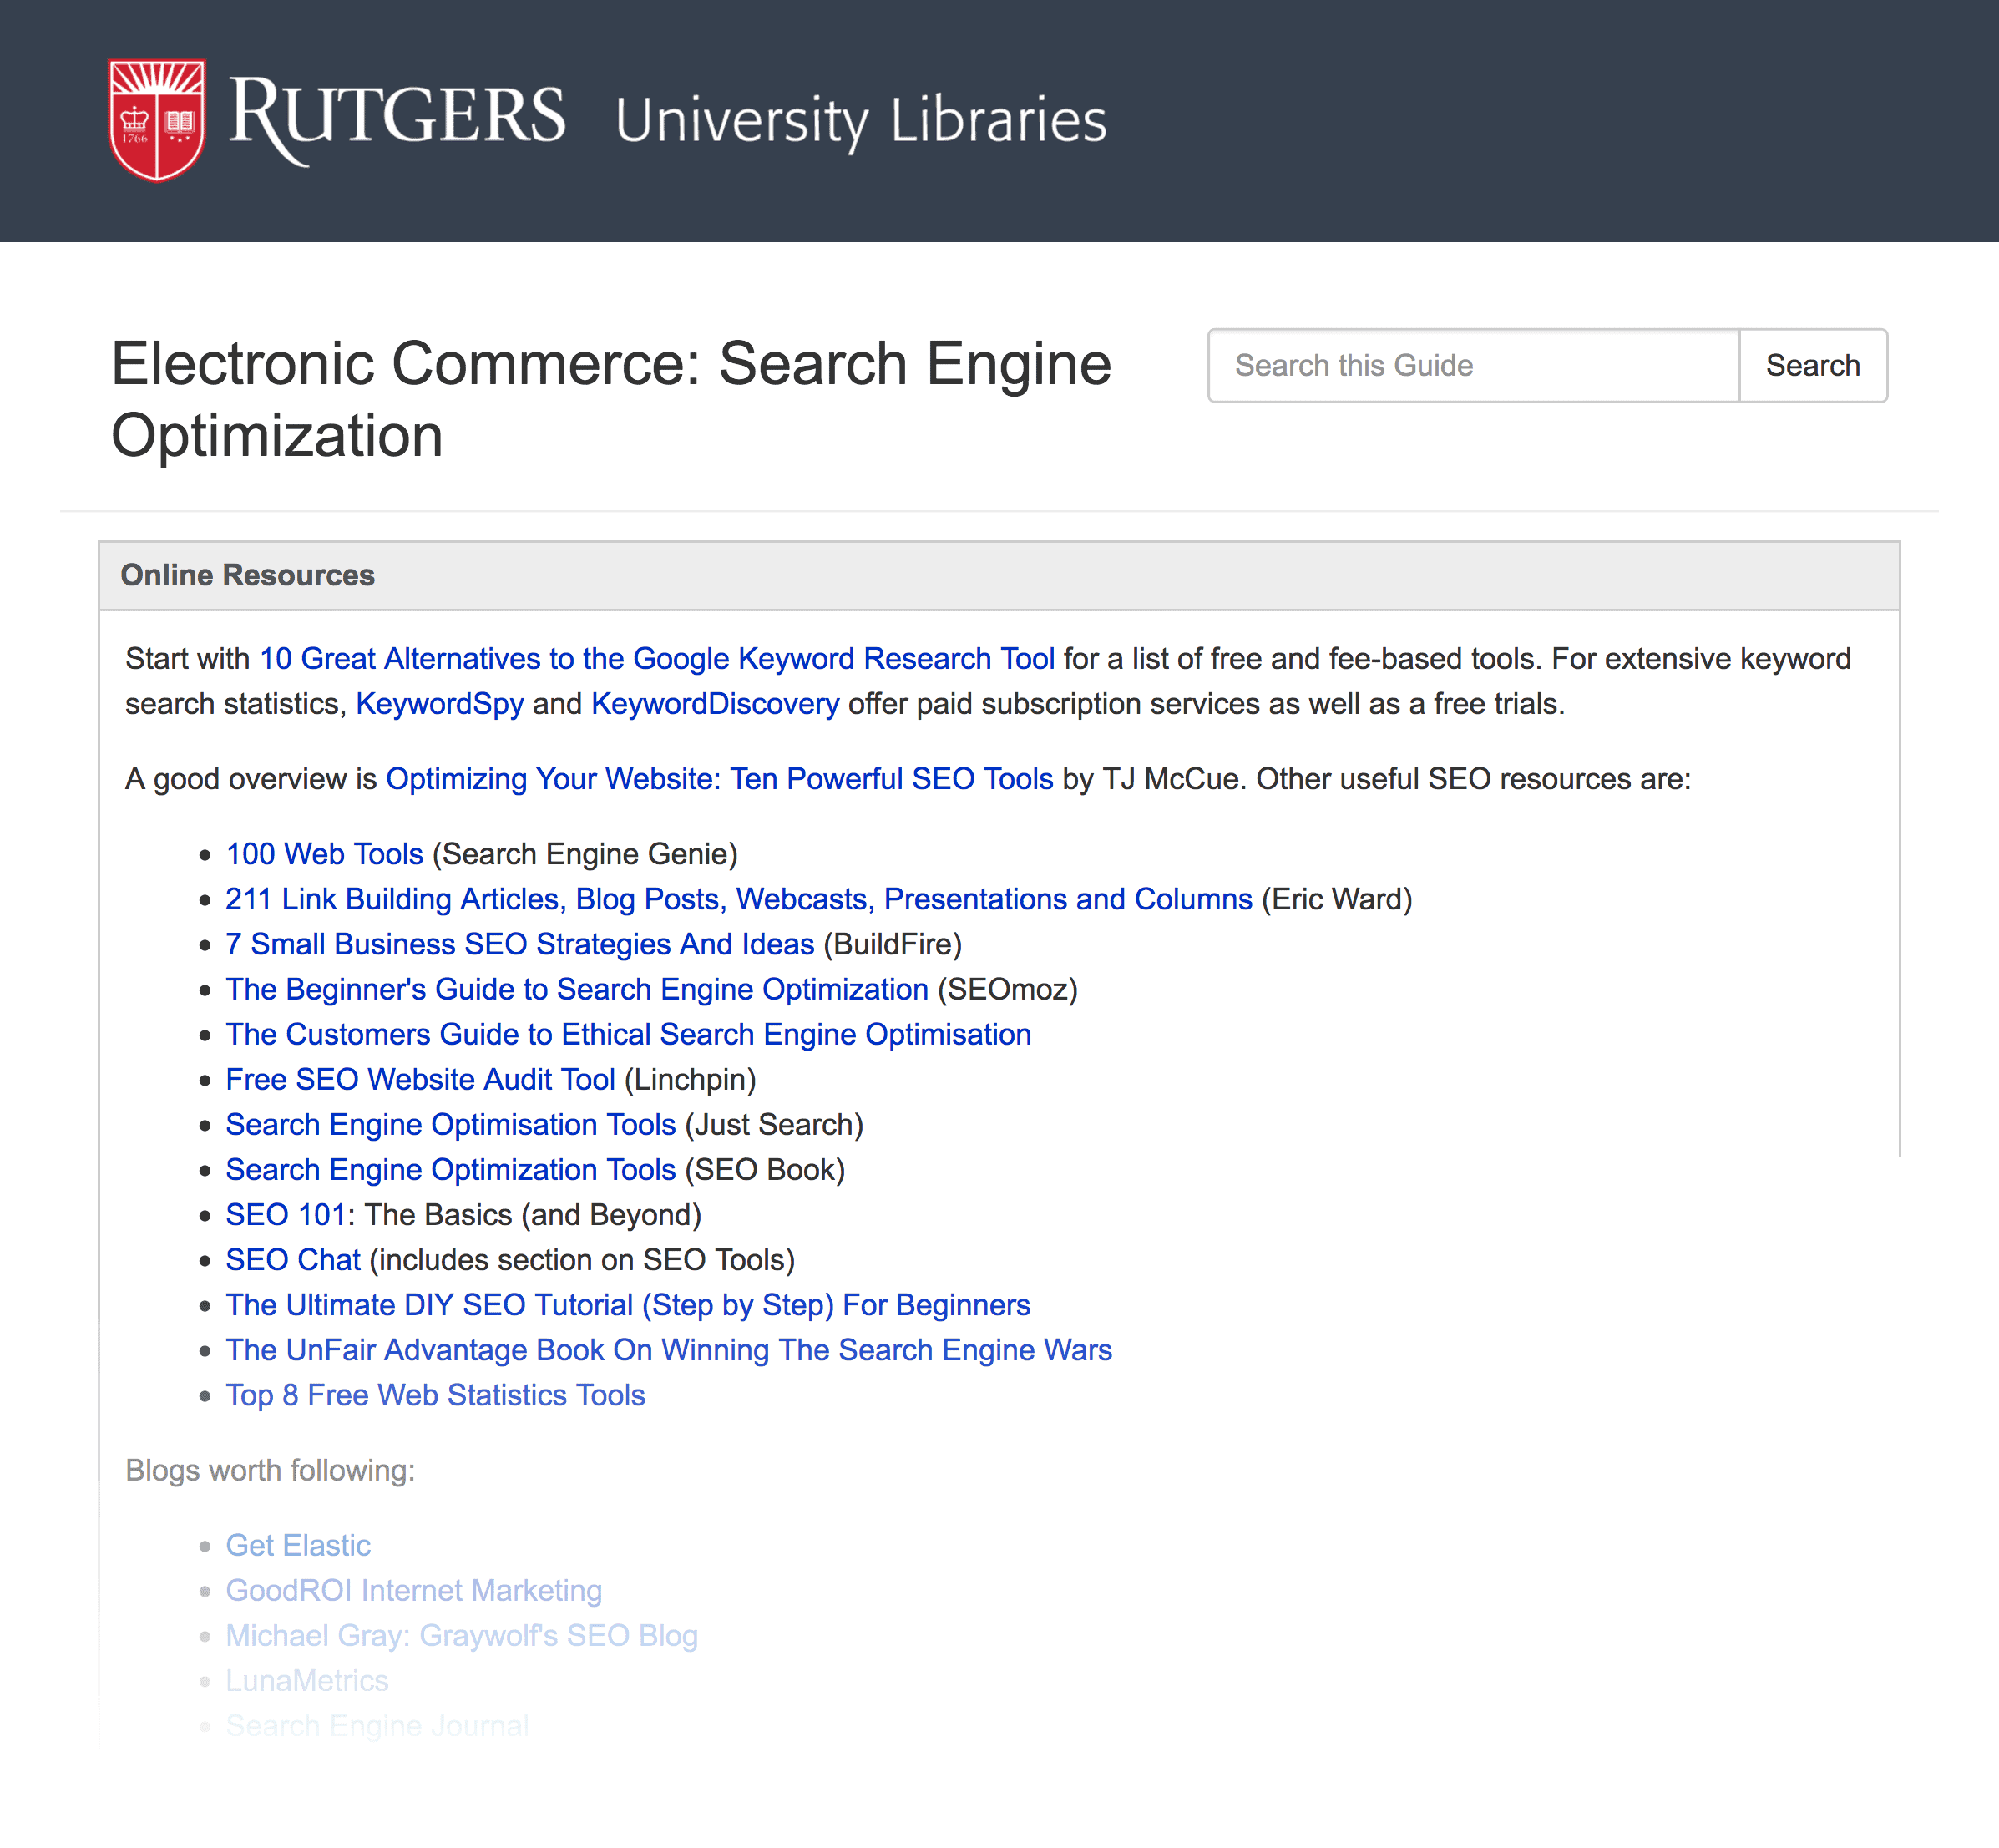 Rutgers resources